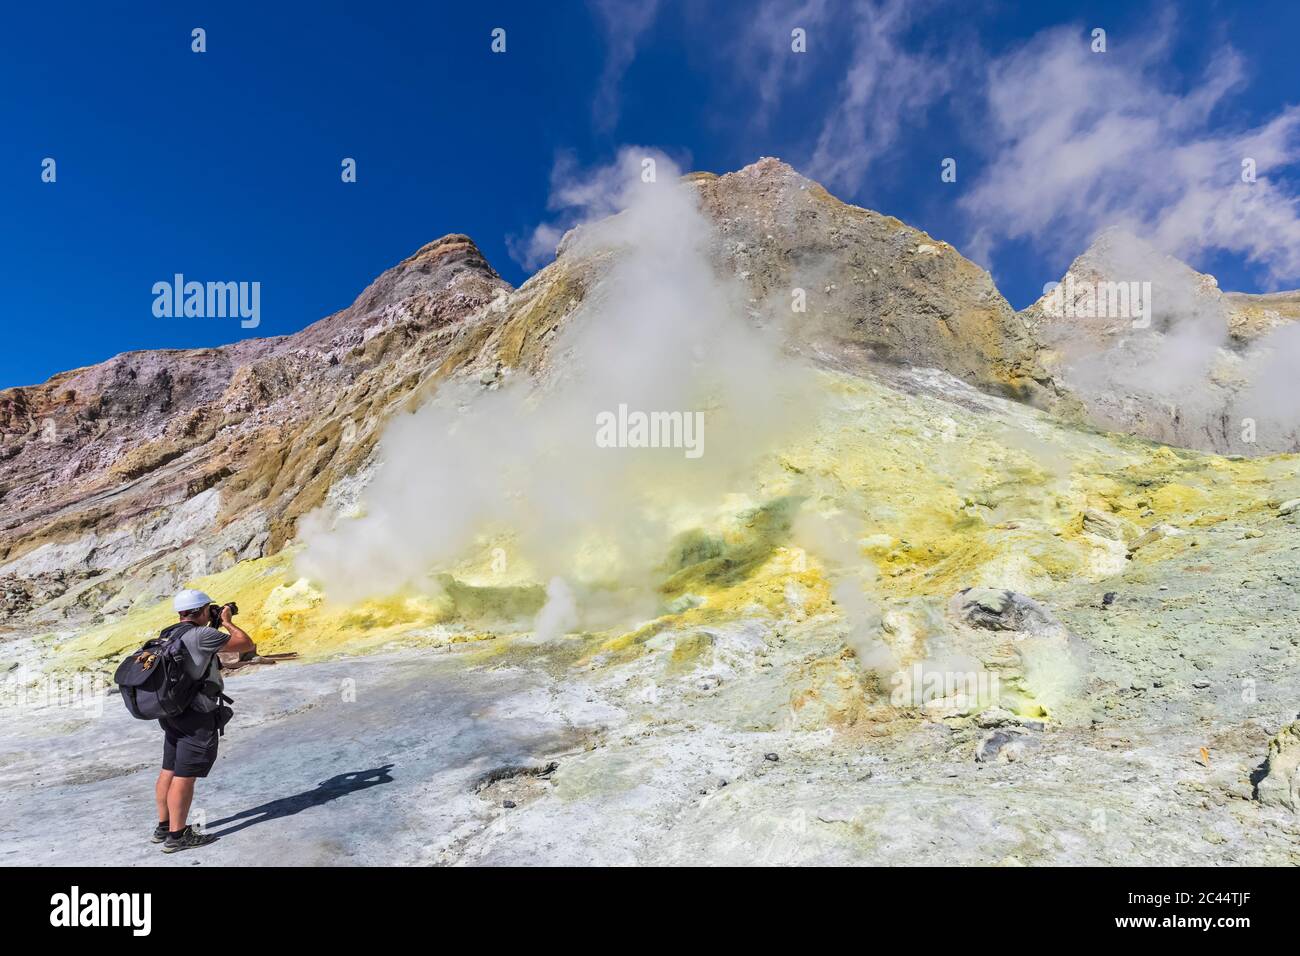 New Zealand, North Island, Whakatane, Male hiker photographing active fumarole at White Island (Whakaari) Stock Photo